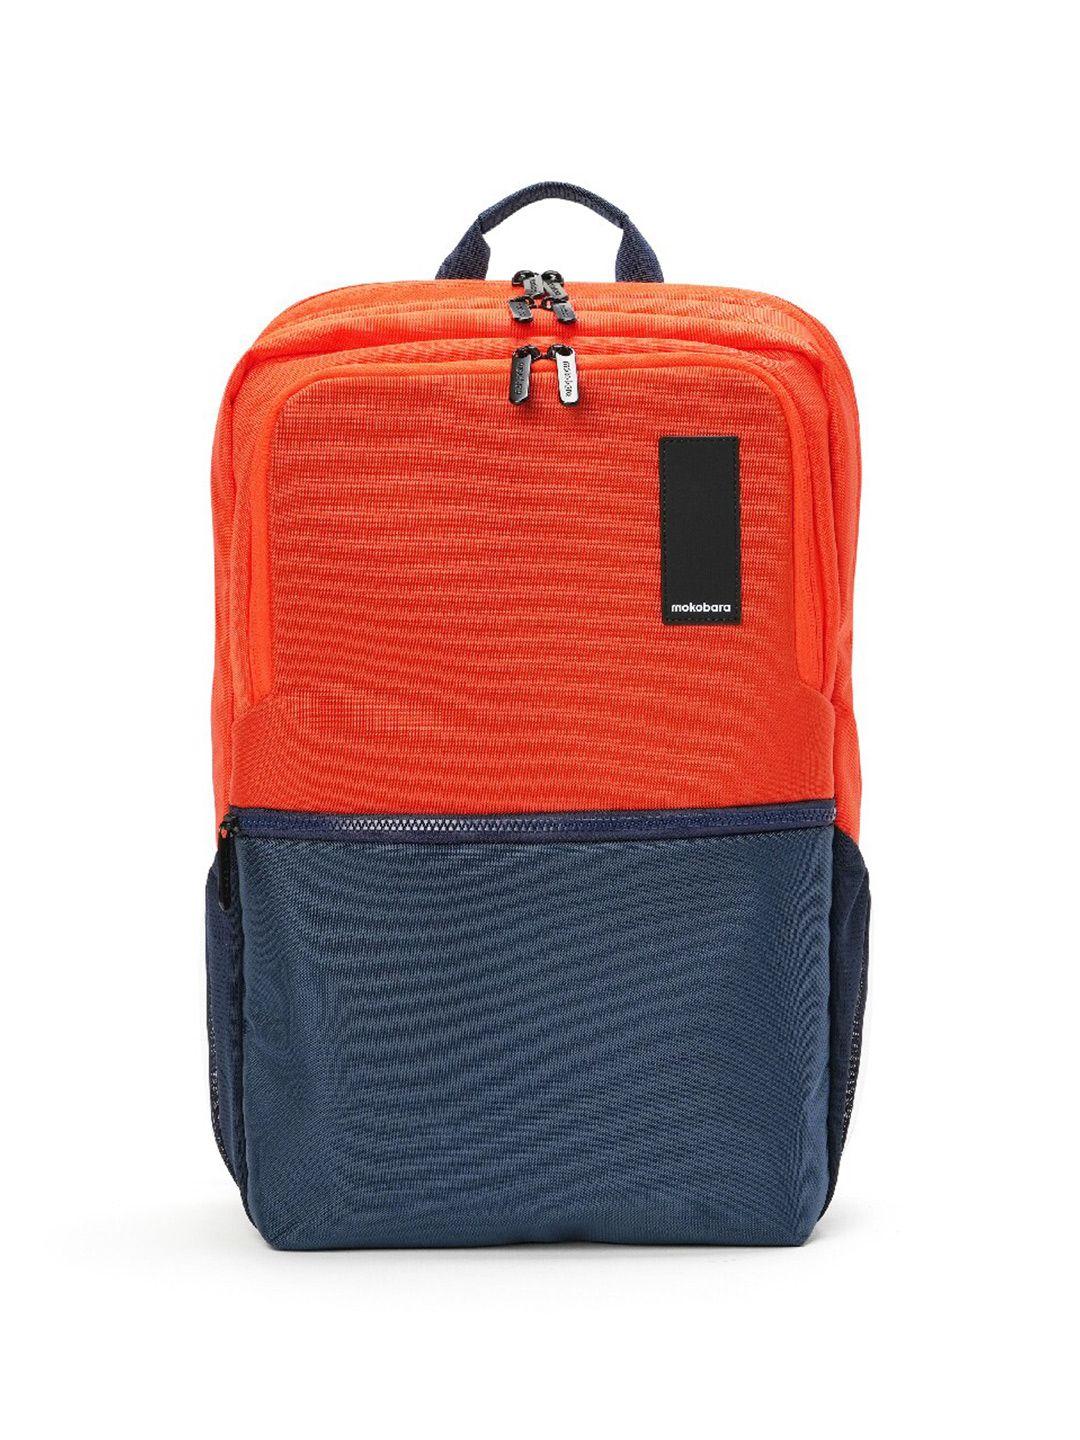 mokobara unisex kaleido colourblocked backpack - 28 l